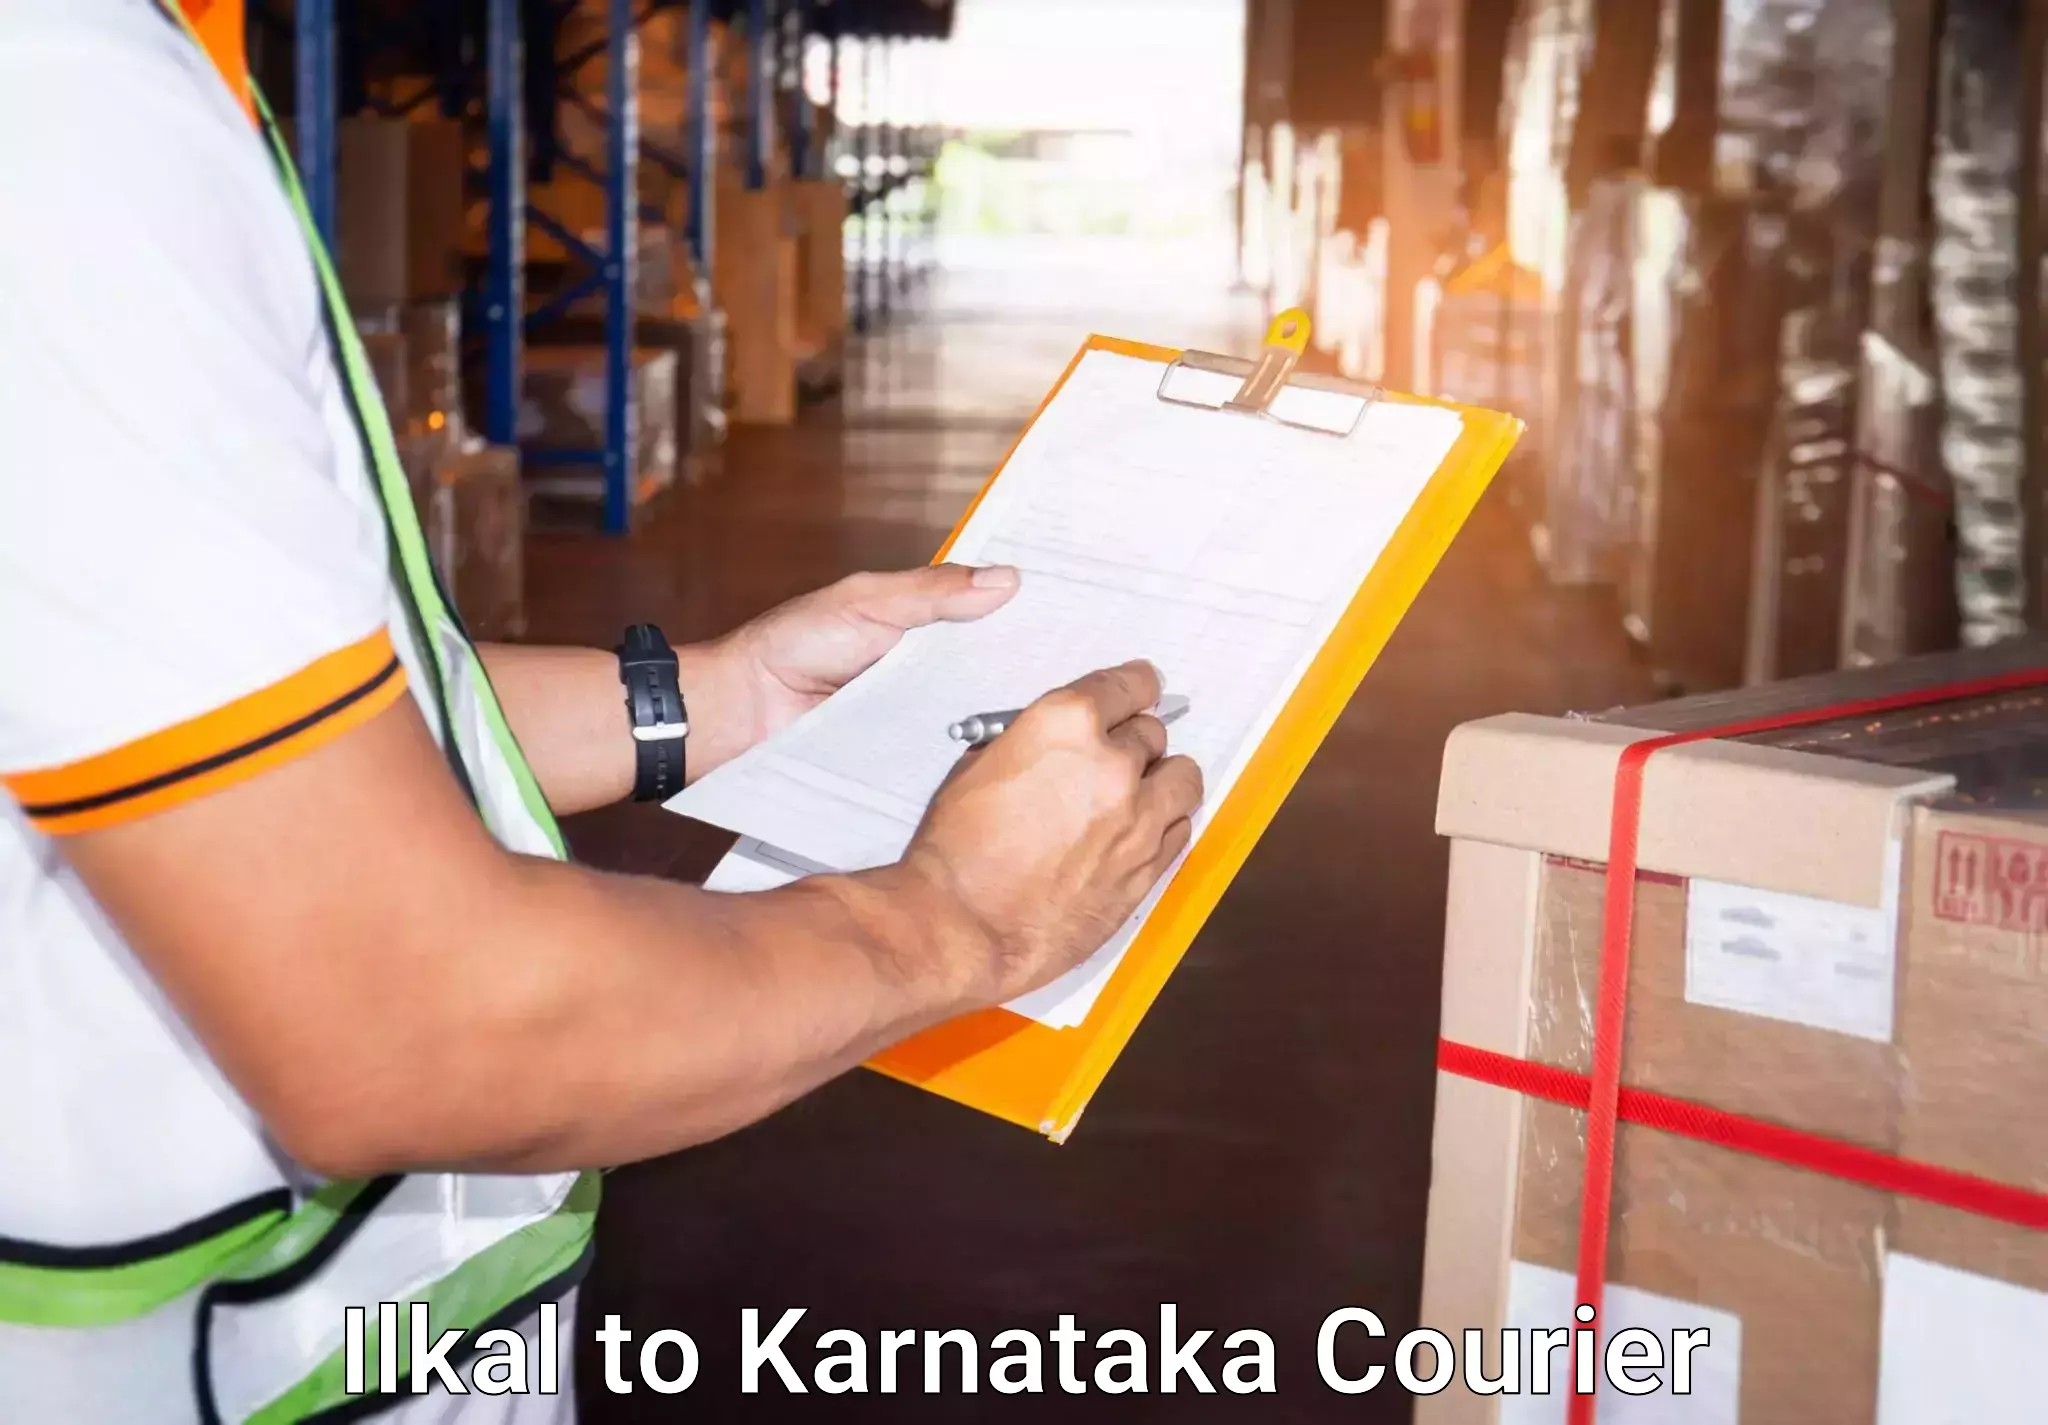 Baggage transport professionals Ilkal to Karnataka